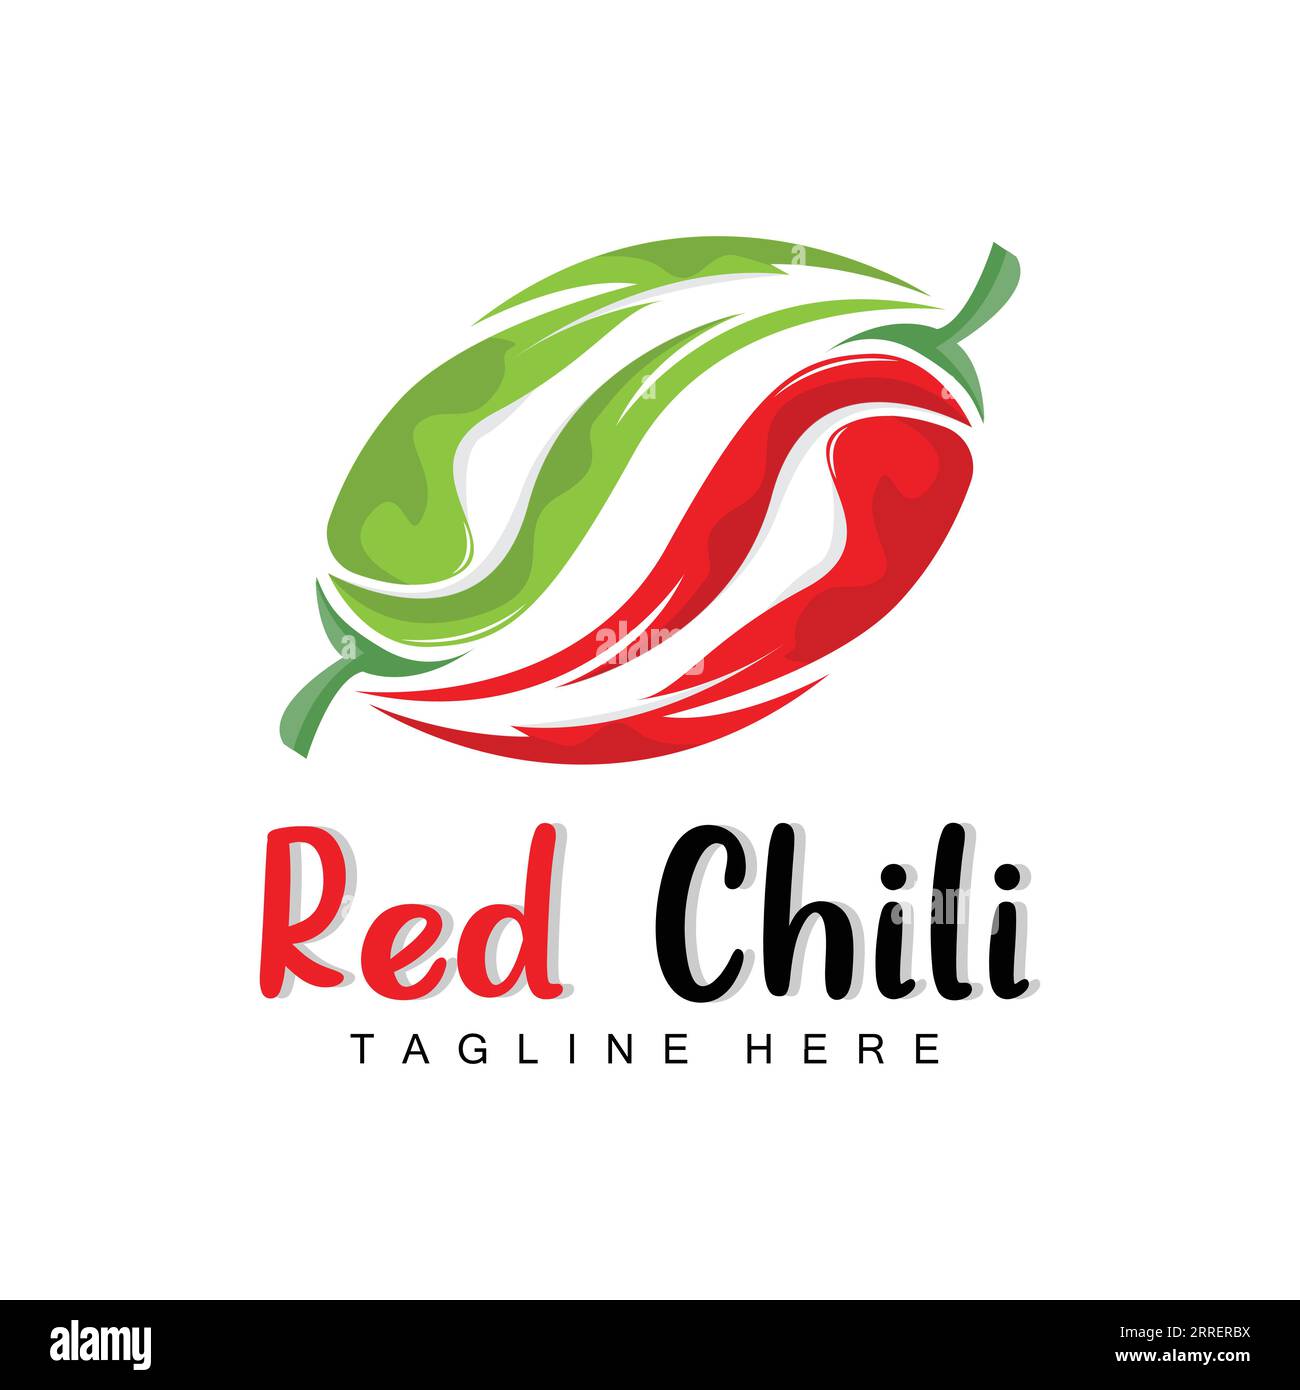 Red Chili Logo, Hot Chili Paprika Vektor, Chili Garten Haus Illustration, Unternehmen Produkt Marke Illustration Stock Vektor